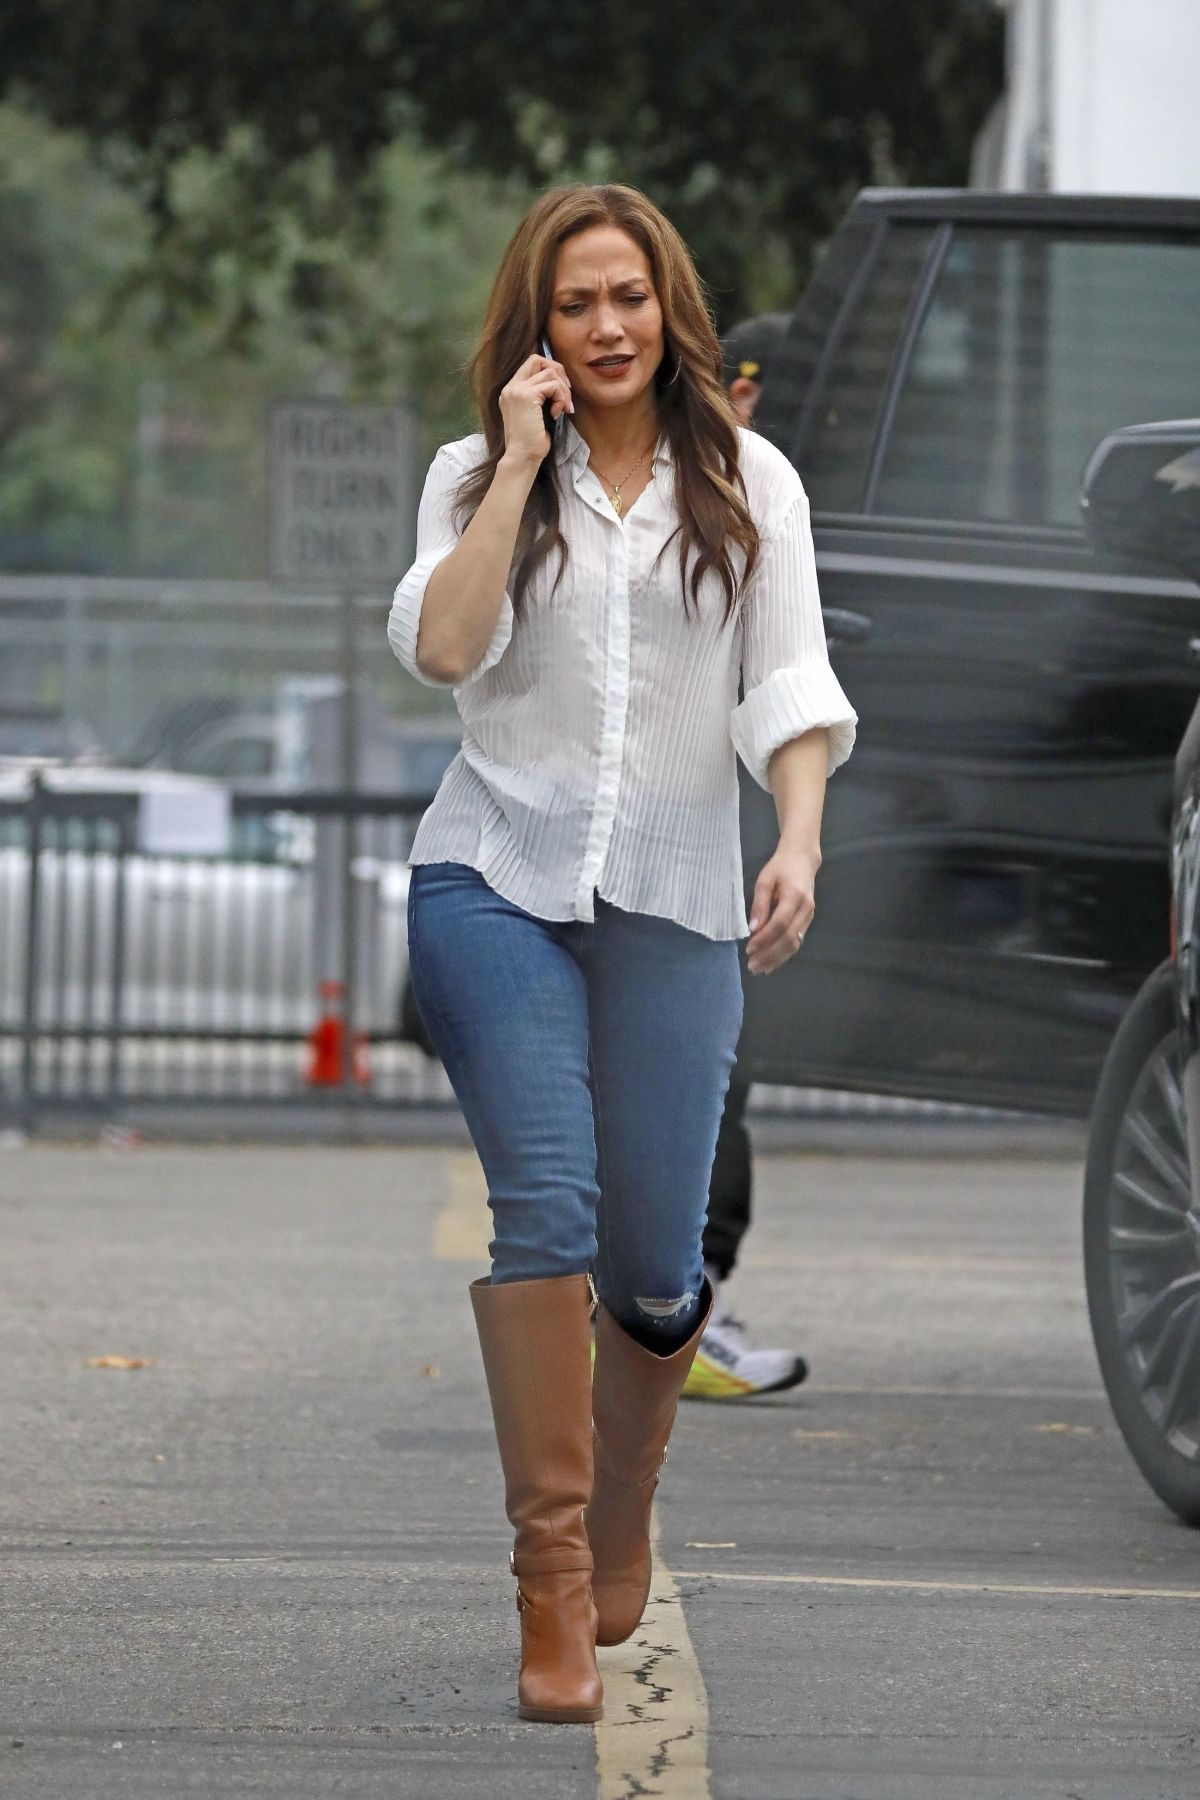 Jennifer Lopez in White Shirt & Denim in LA Outing 1